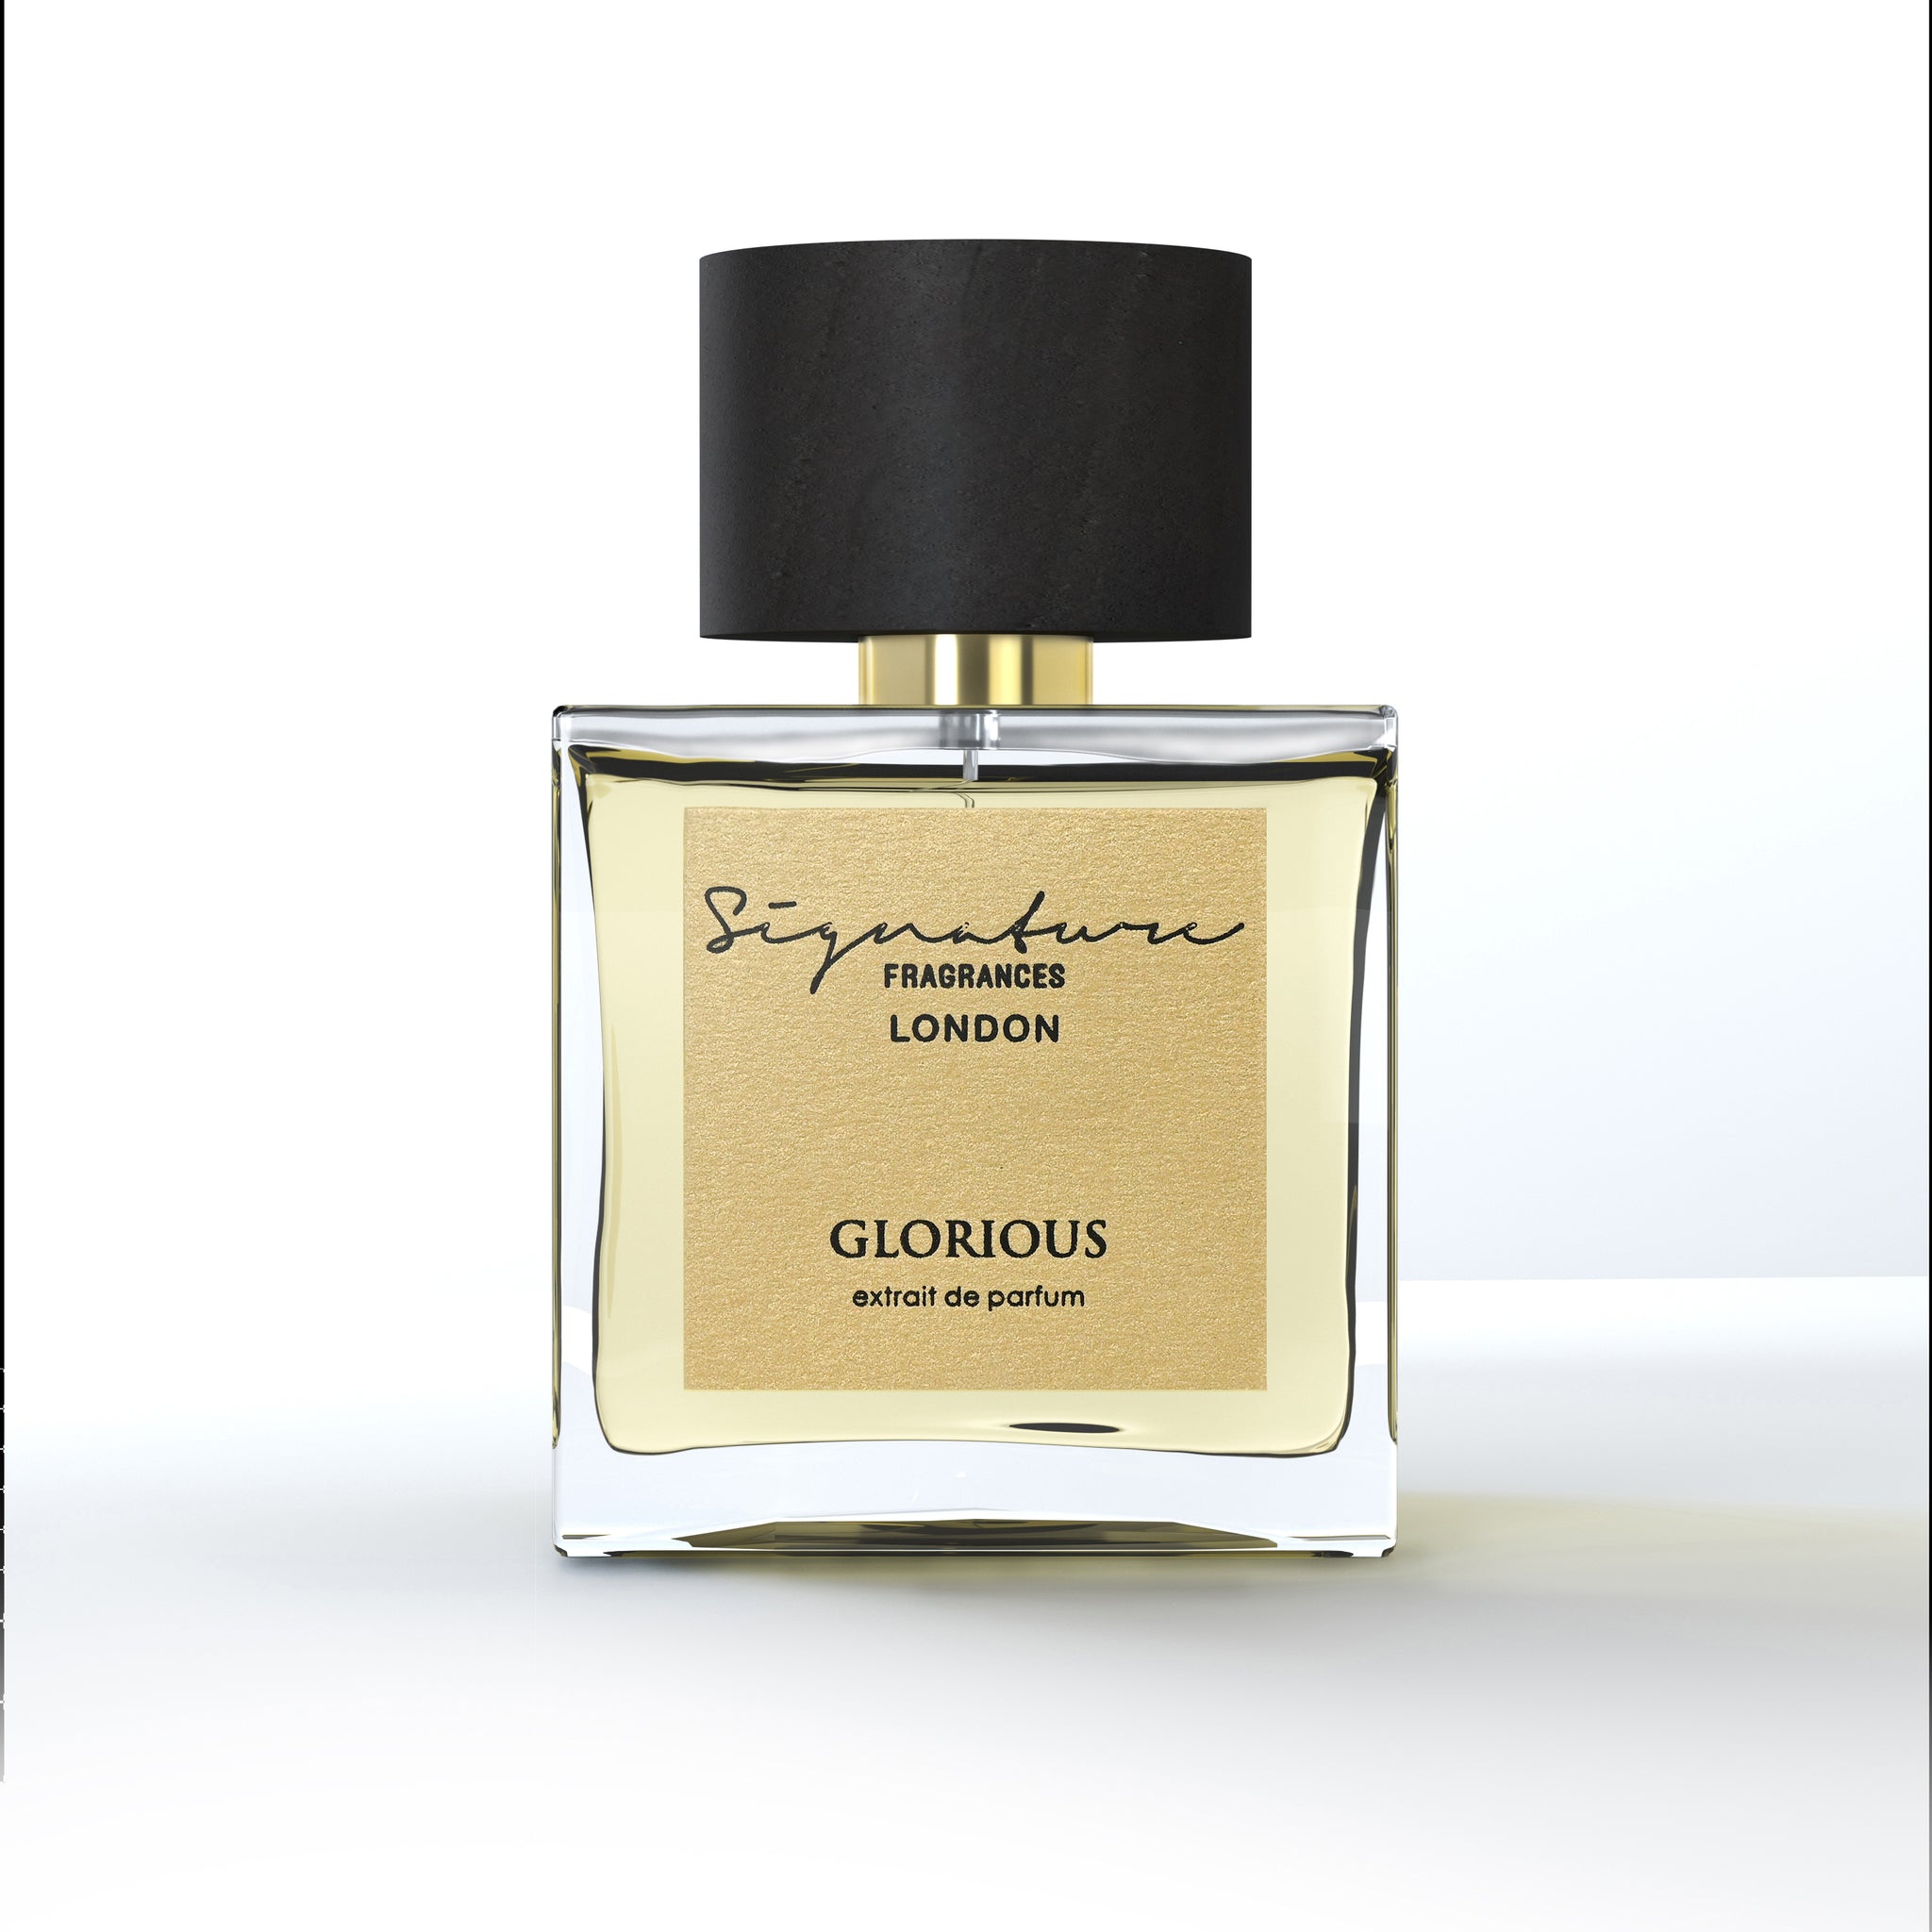 Glorious - Signature Fragrances London